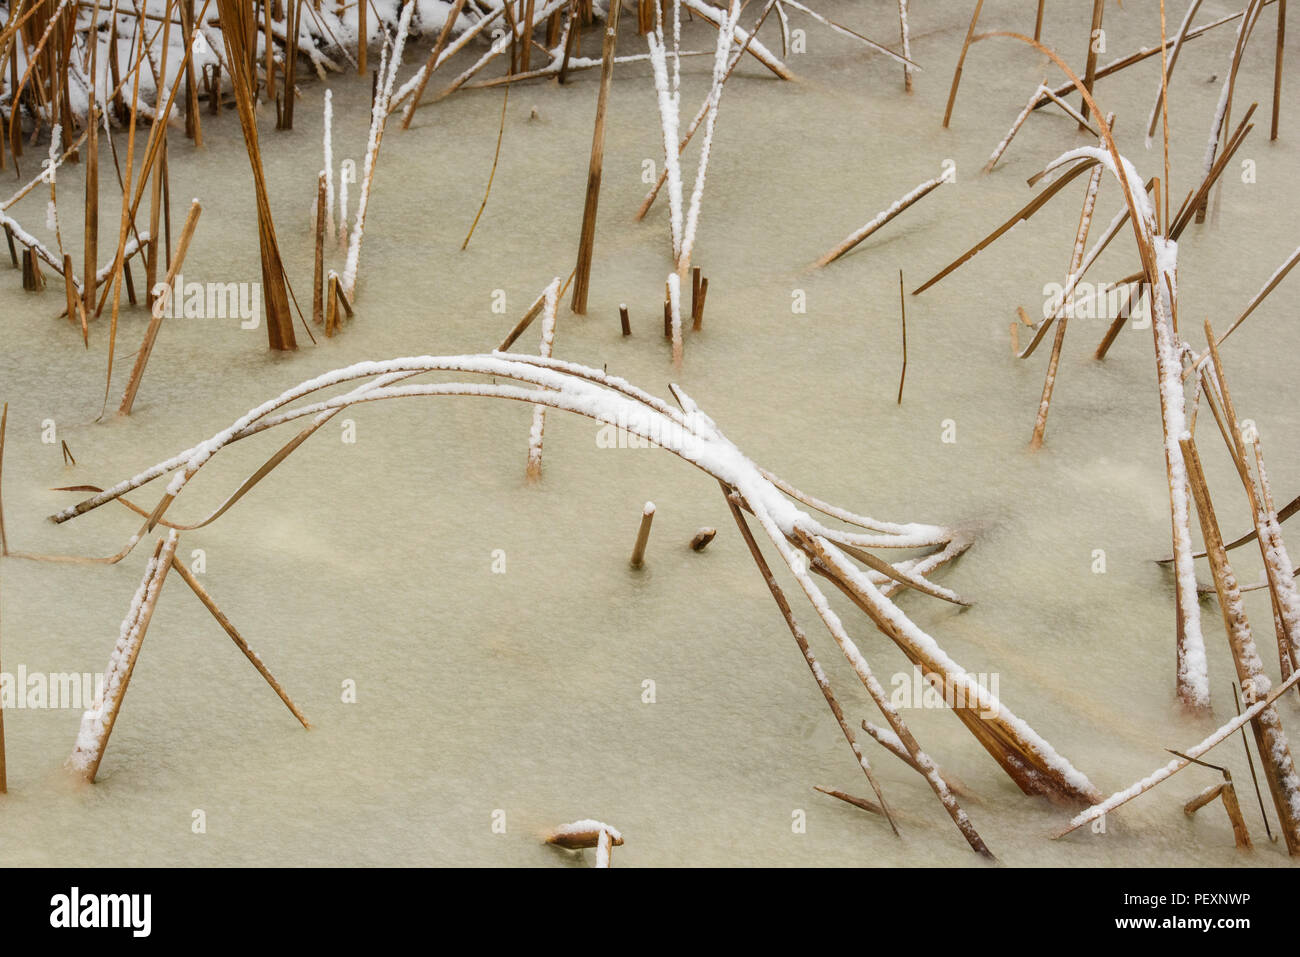 Viscido neve e wetland cattails, Rovere Amaca Marsh, Stonewall, Manitoba, Canada Foto Stock